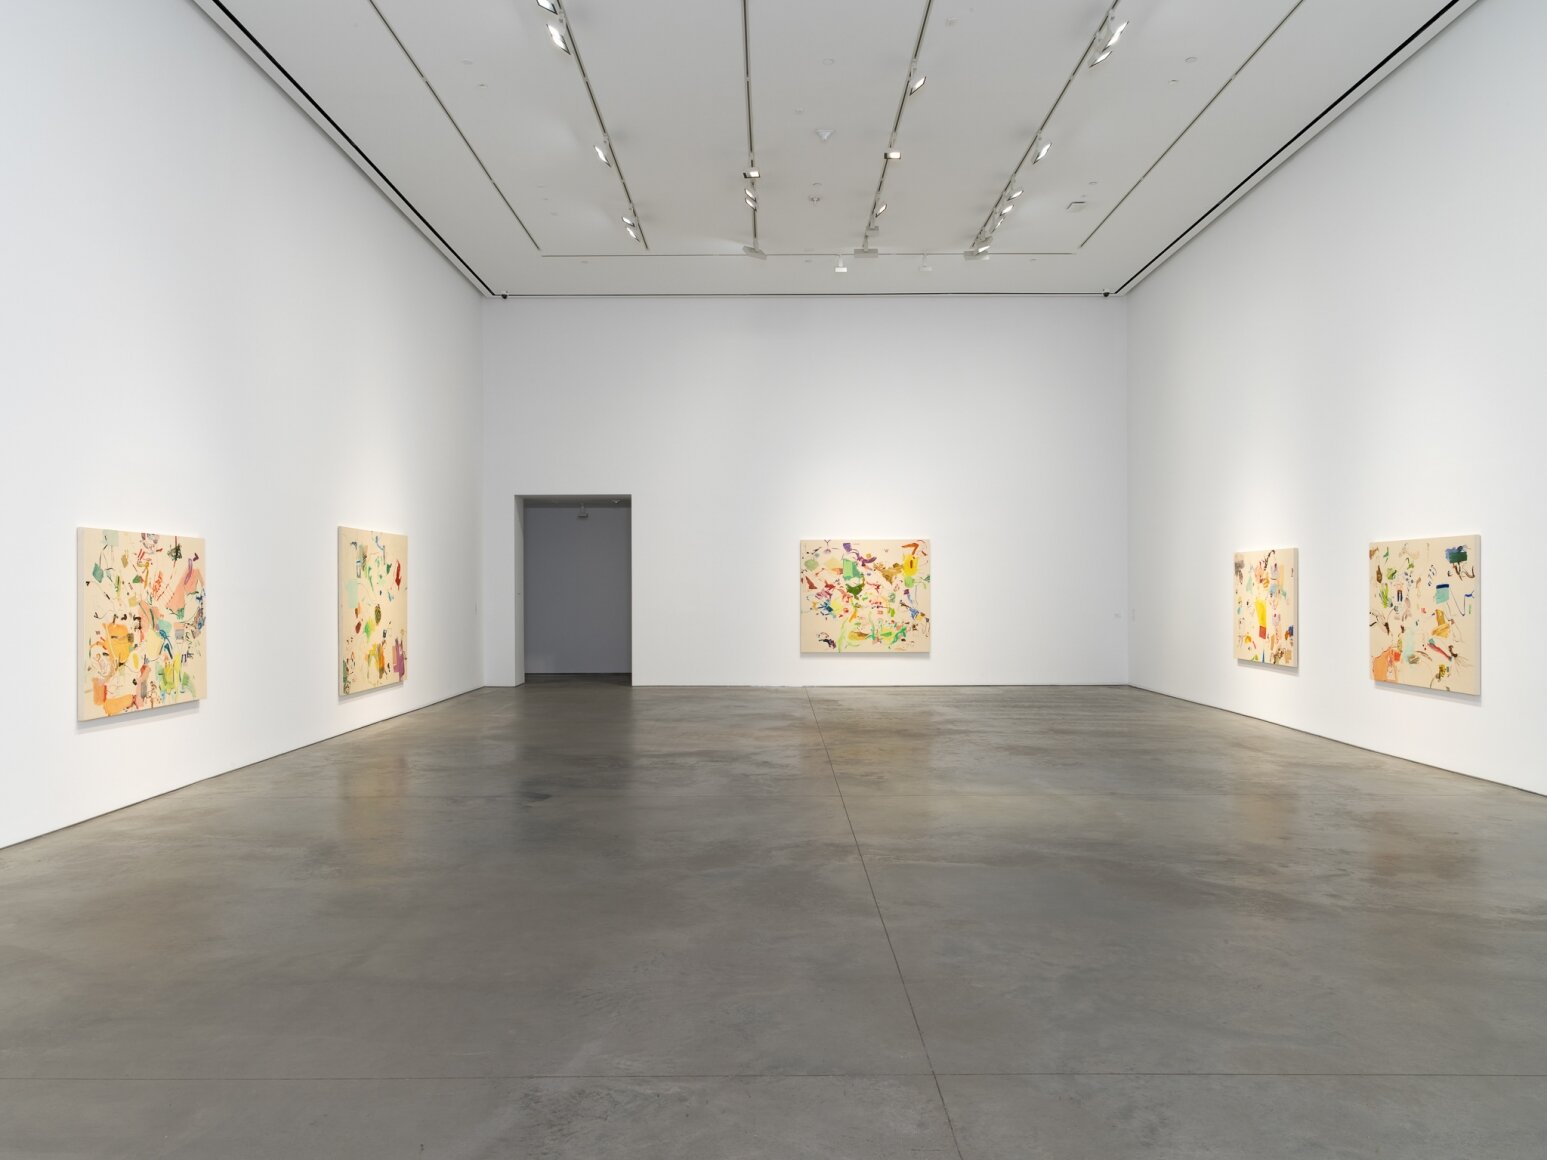  Sue Williams, installation view: 303 Gallery, New York, 2020 